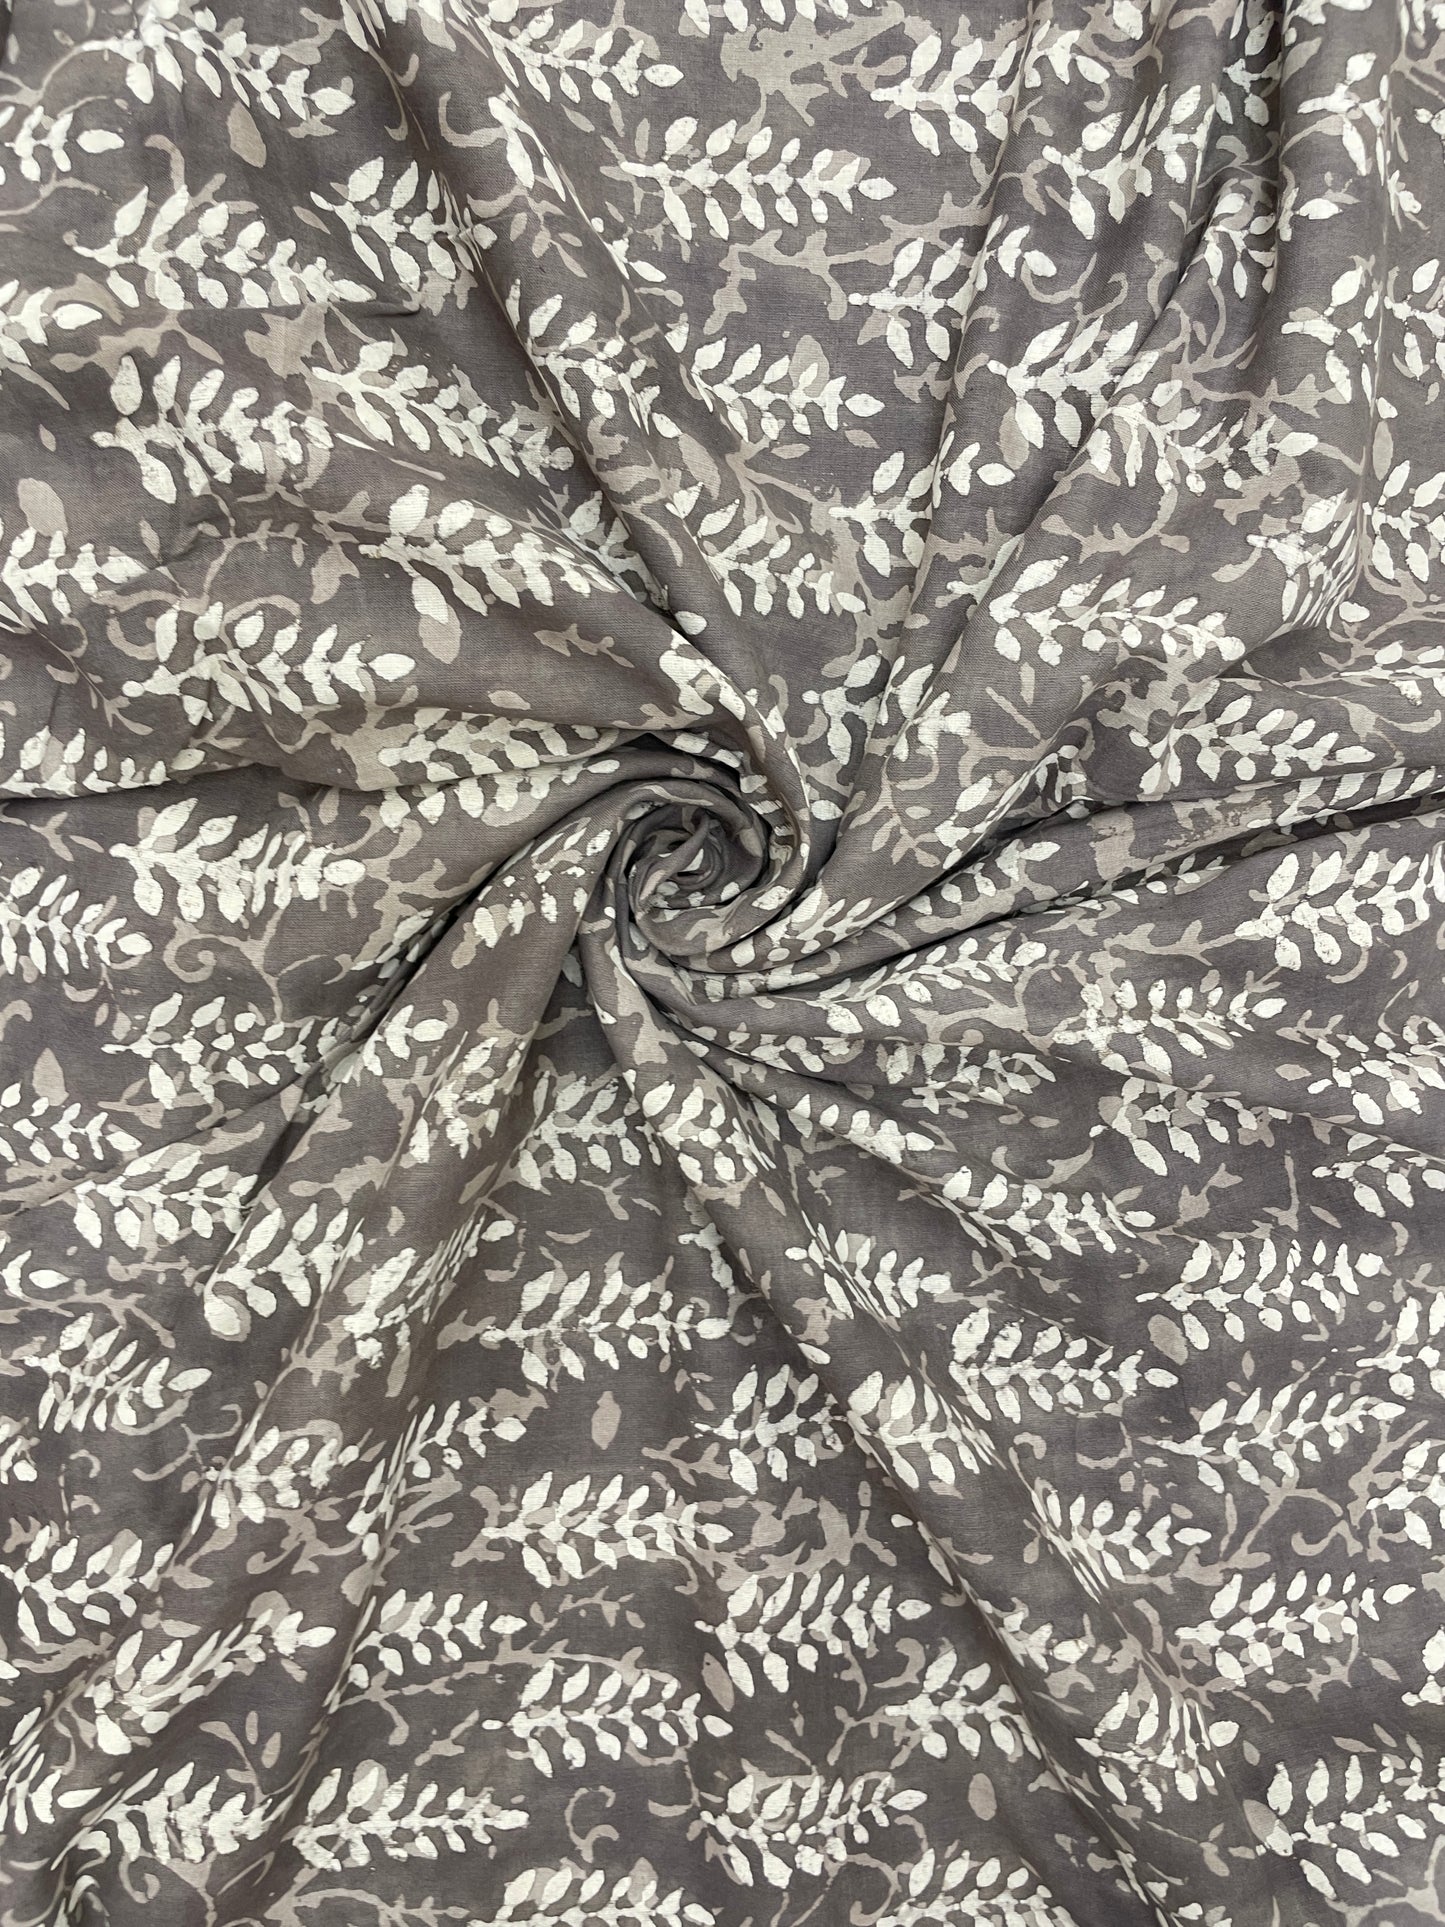 Exquisite Beautiful Grey Block Print On Cotton Fabric